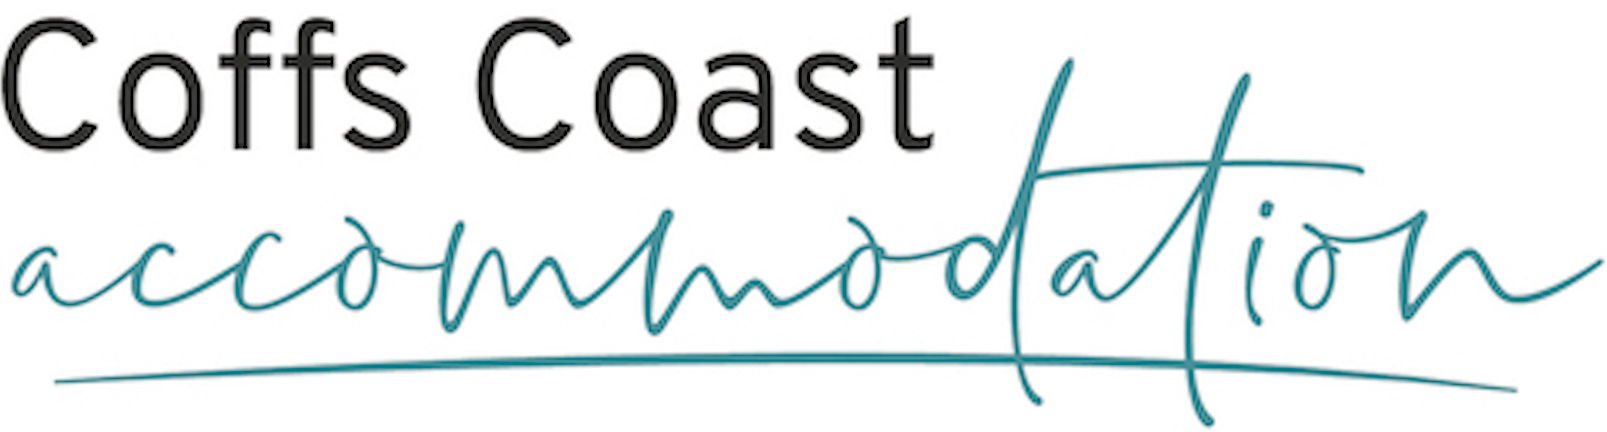 Coffs coast logo